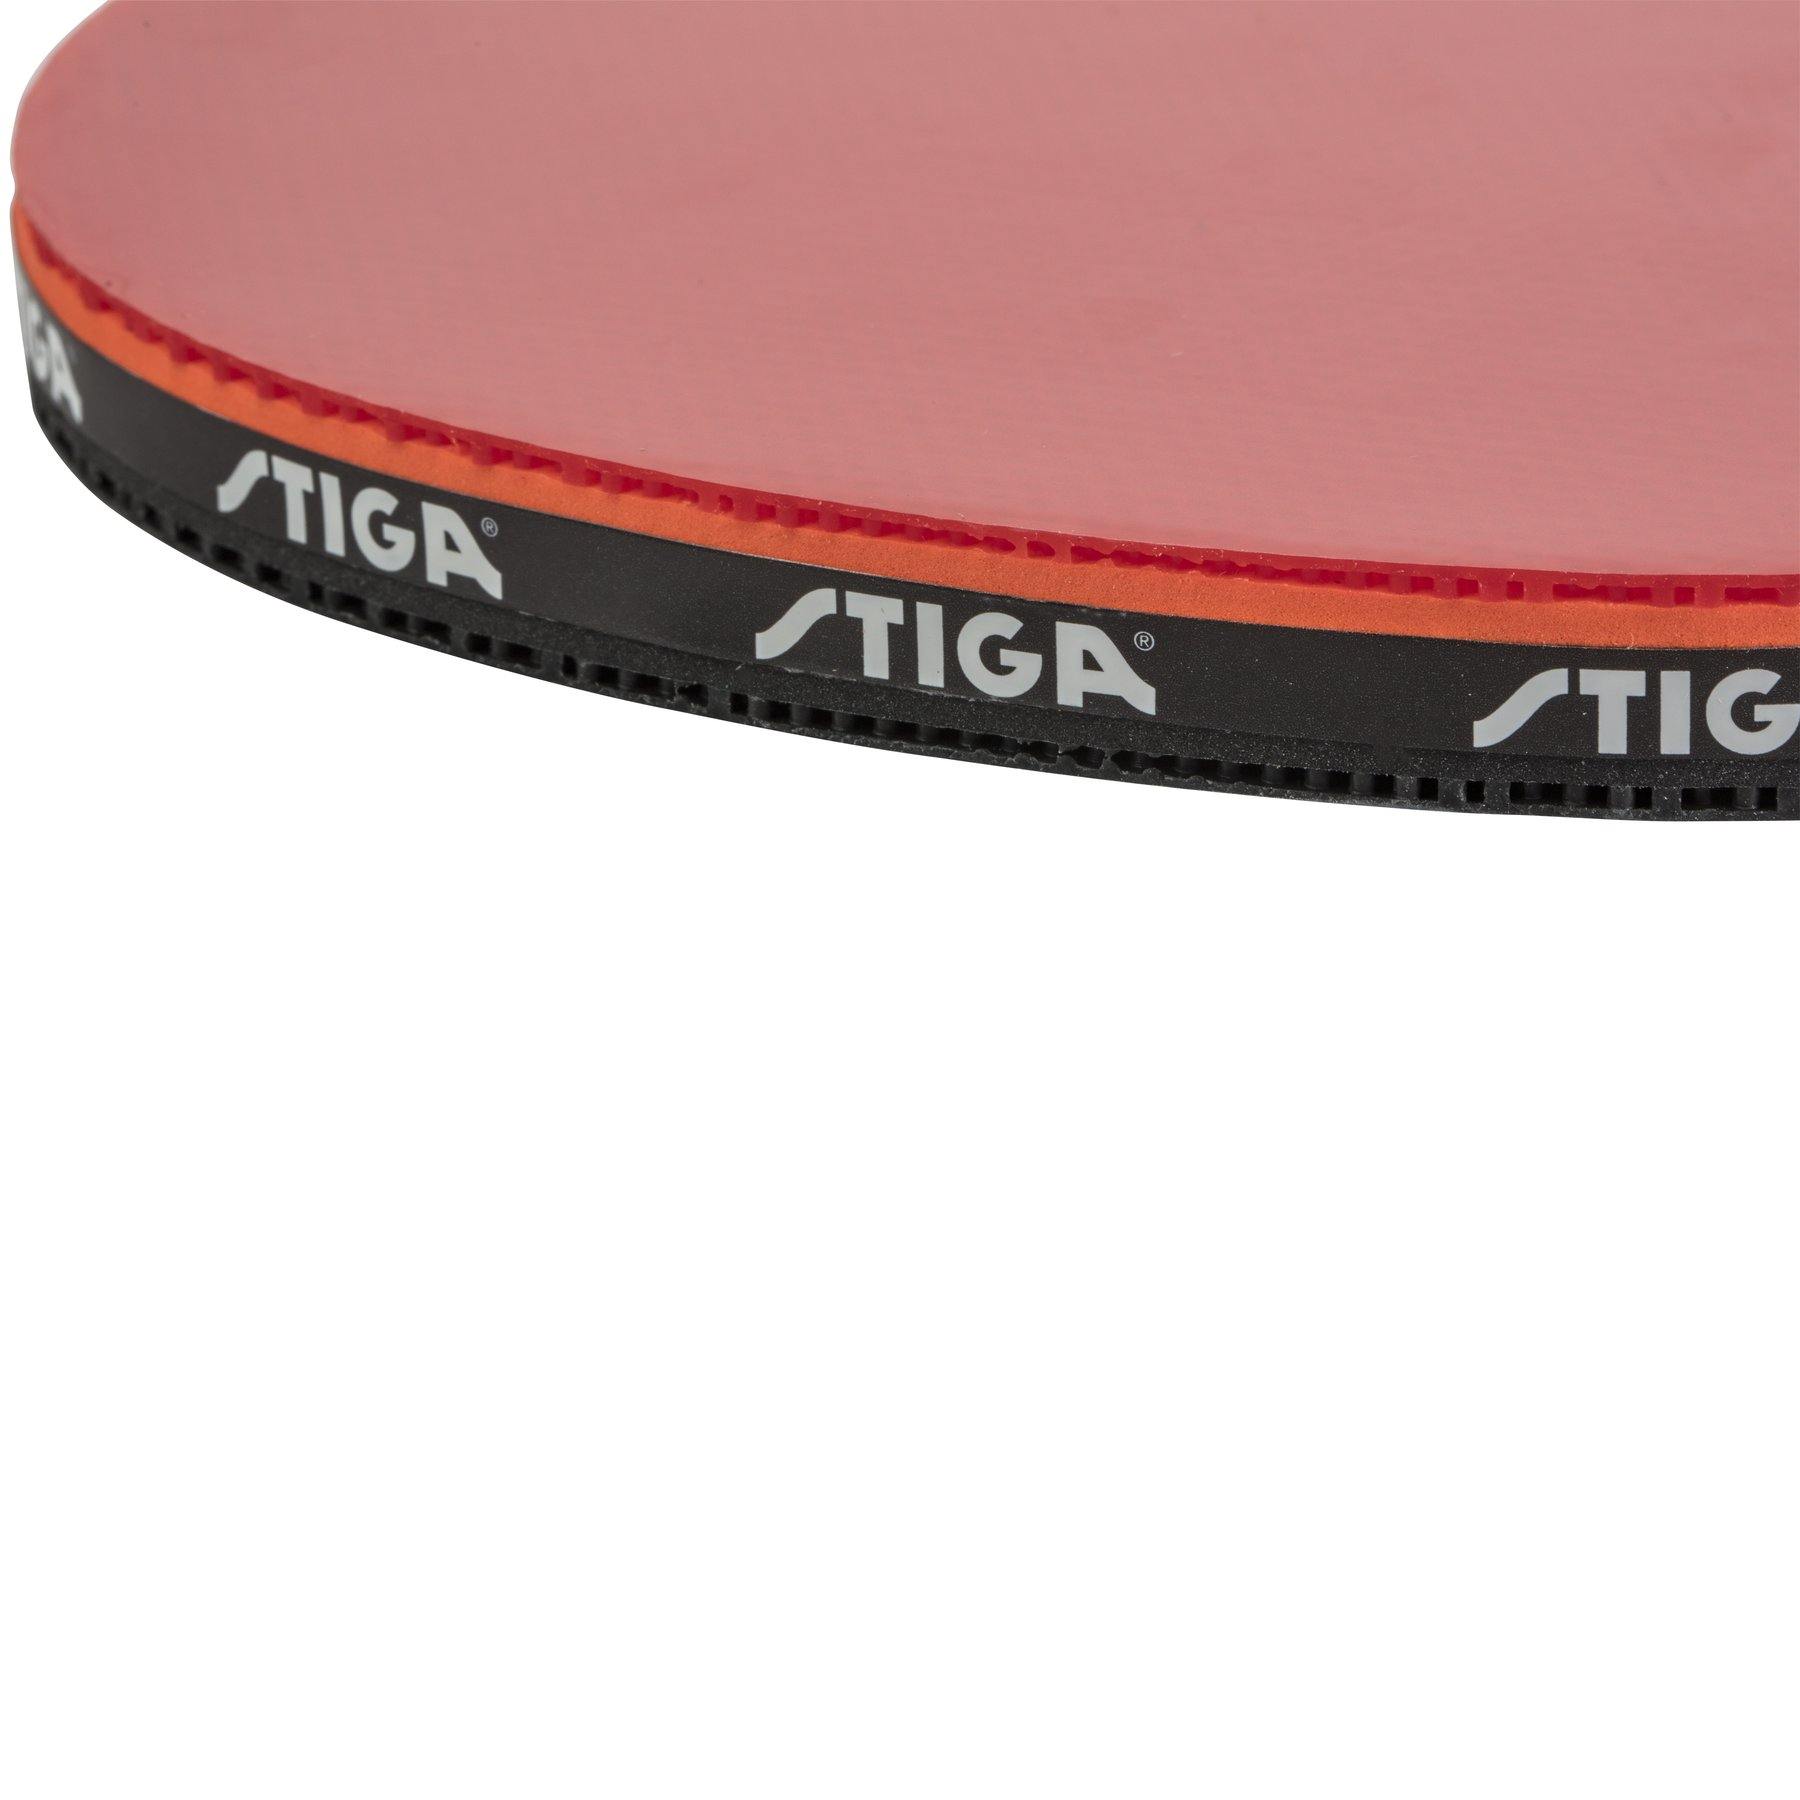 Stiga Table Tennis STIGA - Talon Table Tennis Racket - T1282